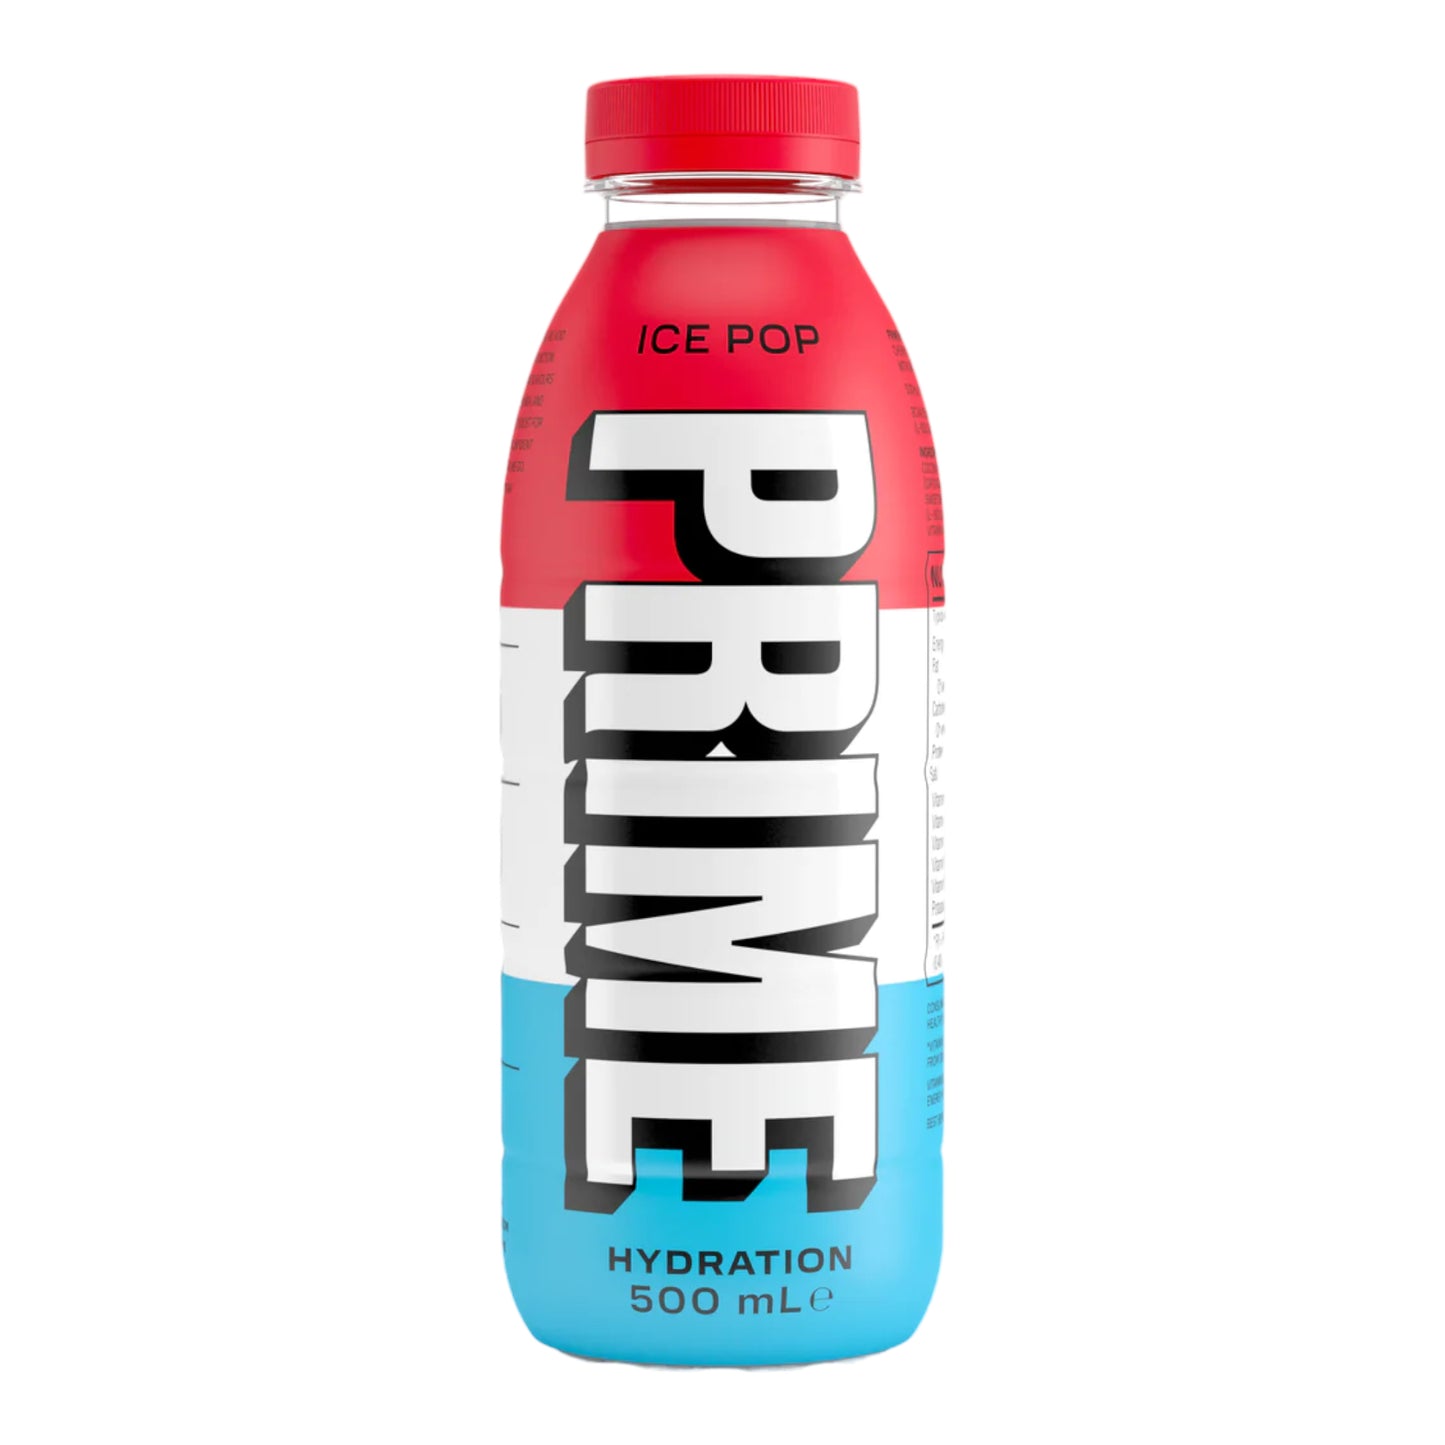 PRIME Hydration Ice Pop 500ml (UK VERSION)